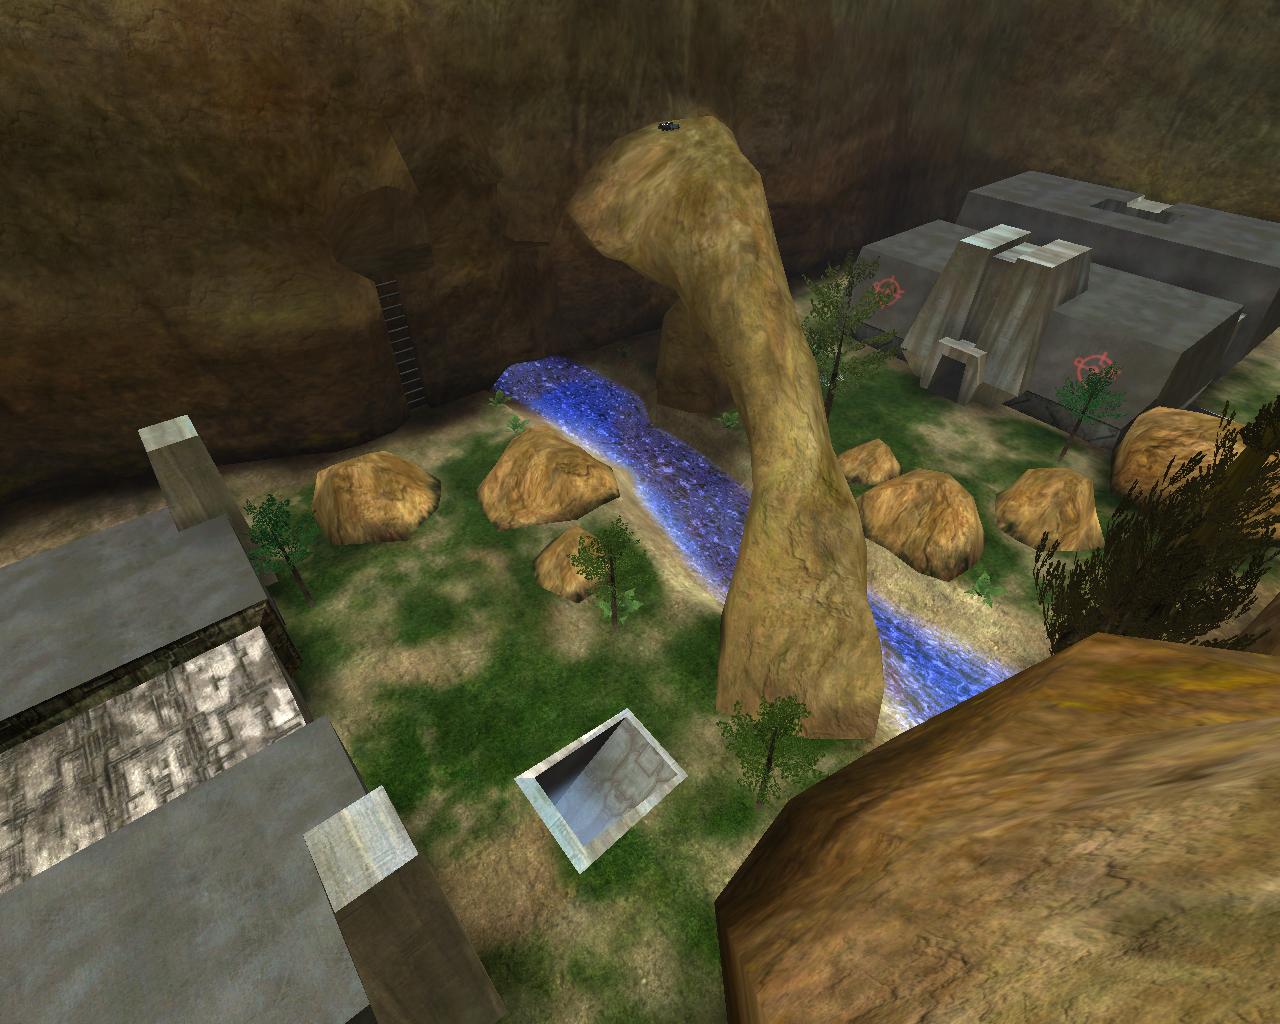 Halo: Combat Evolved for Macintosh - Game - Halopedia, the Halo wiki